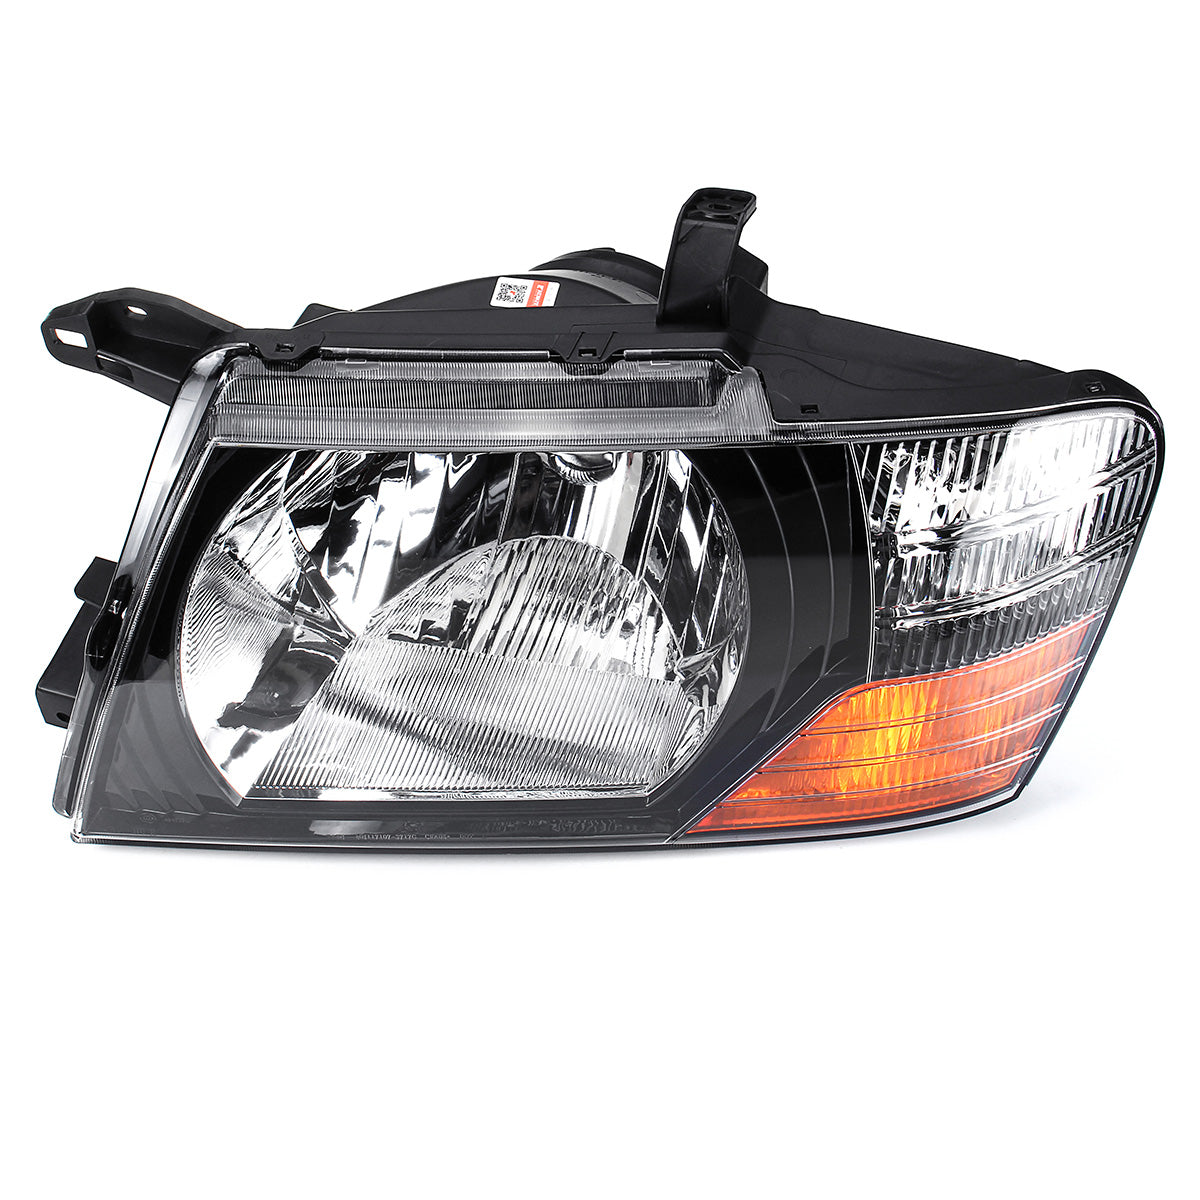 Dark Slate Gray Car Front Headlight Head Lamp Assembly Glass Lens Cover Pair for Mitsubishi Pajero Montero 2000-2006